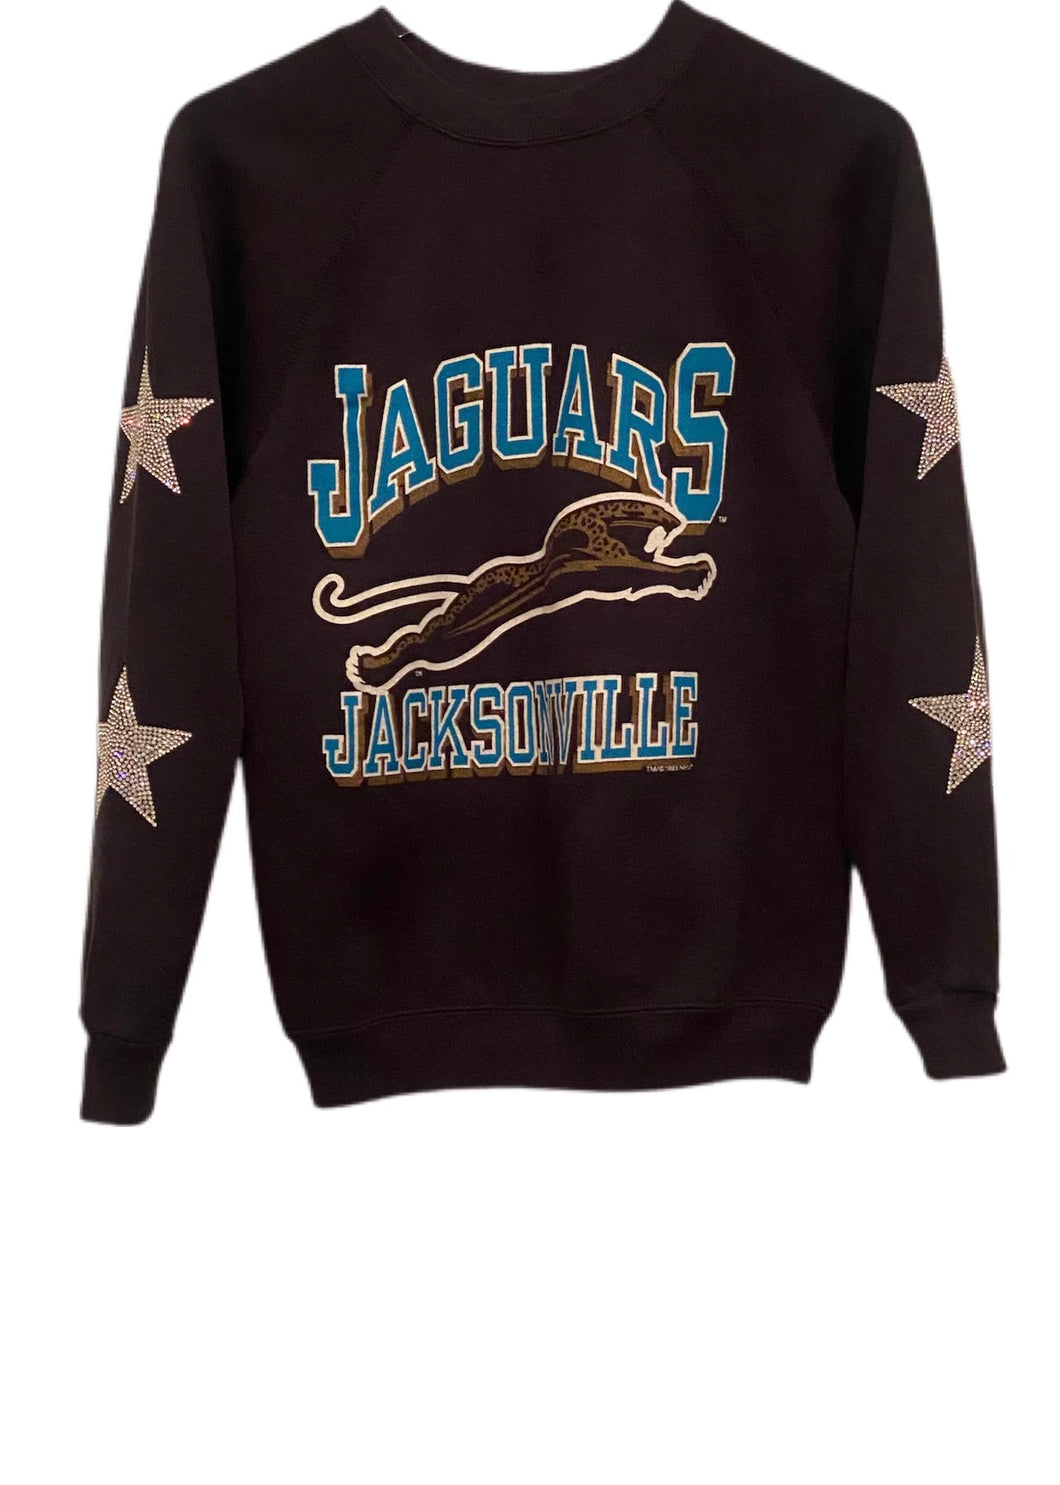 Jacksonville Jaguars, NFL One of a KIND Vintage Sweatshirt with Crystal Star Design with Custom Name